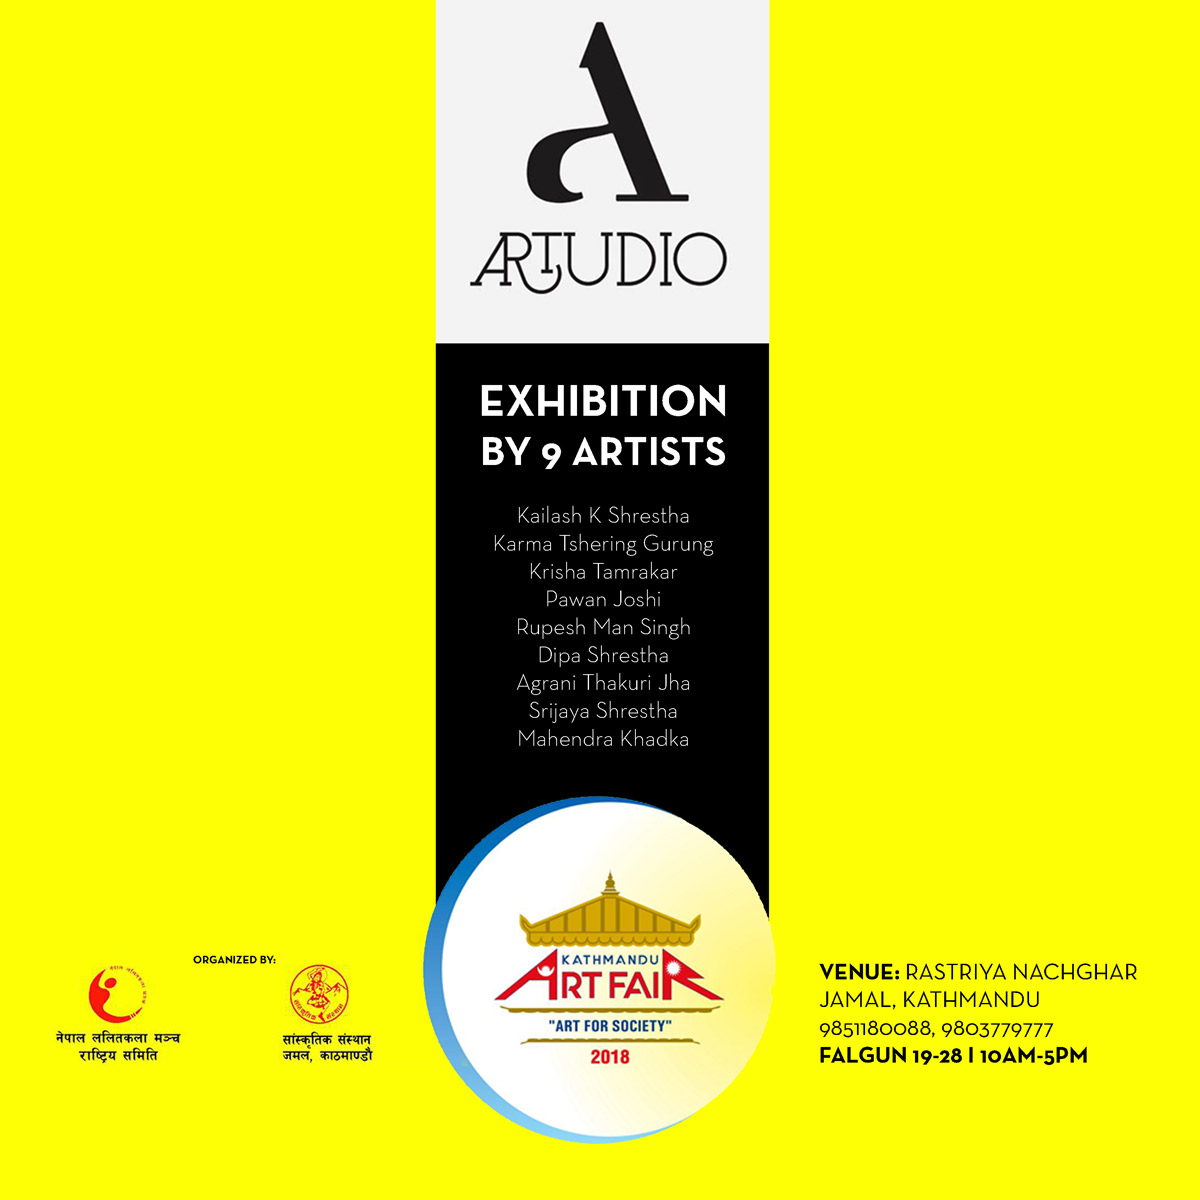 9 Artists from Artudio Exhibiting in Kathmandu Art Fair 2018 post thumbnail image